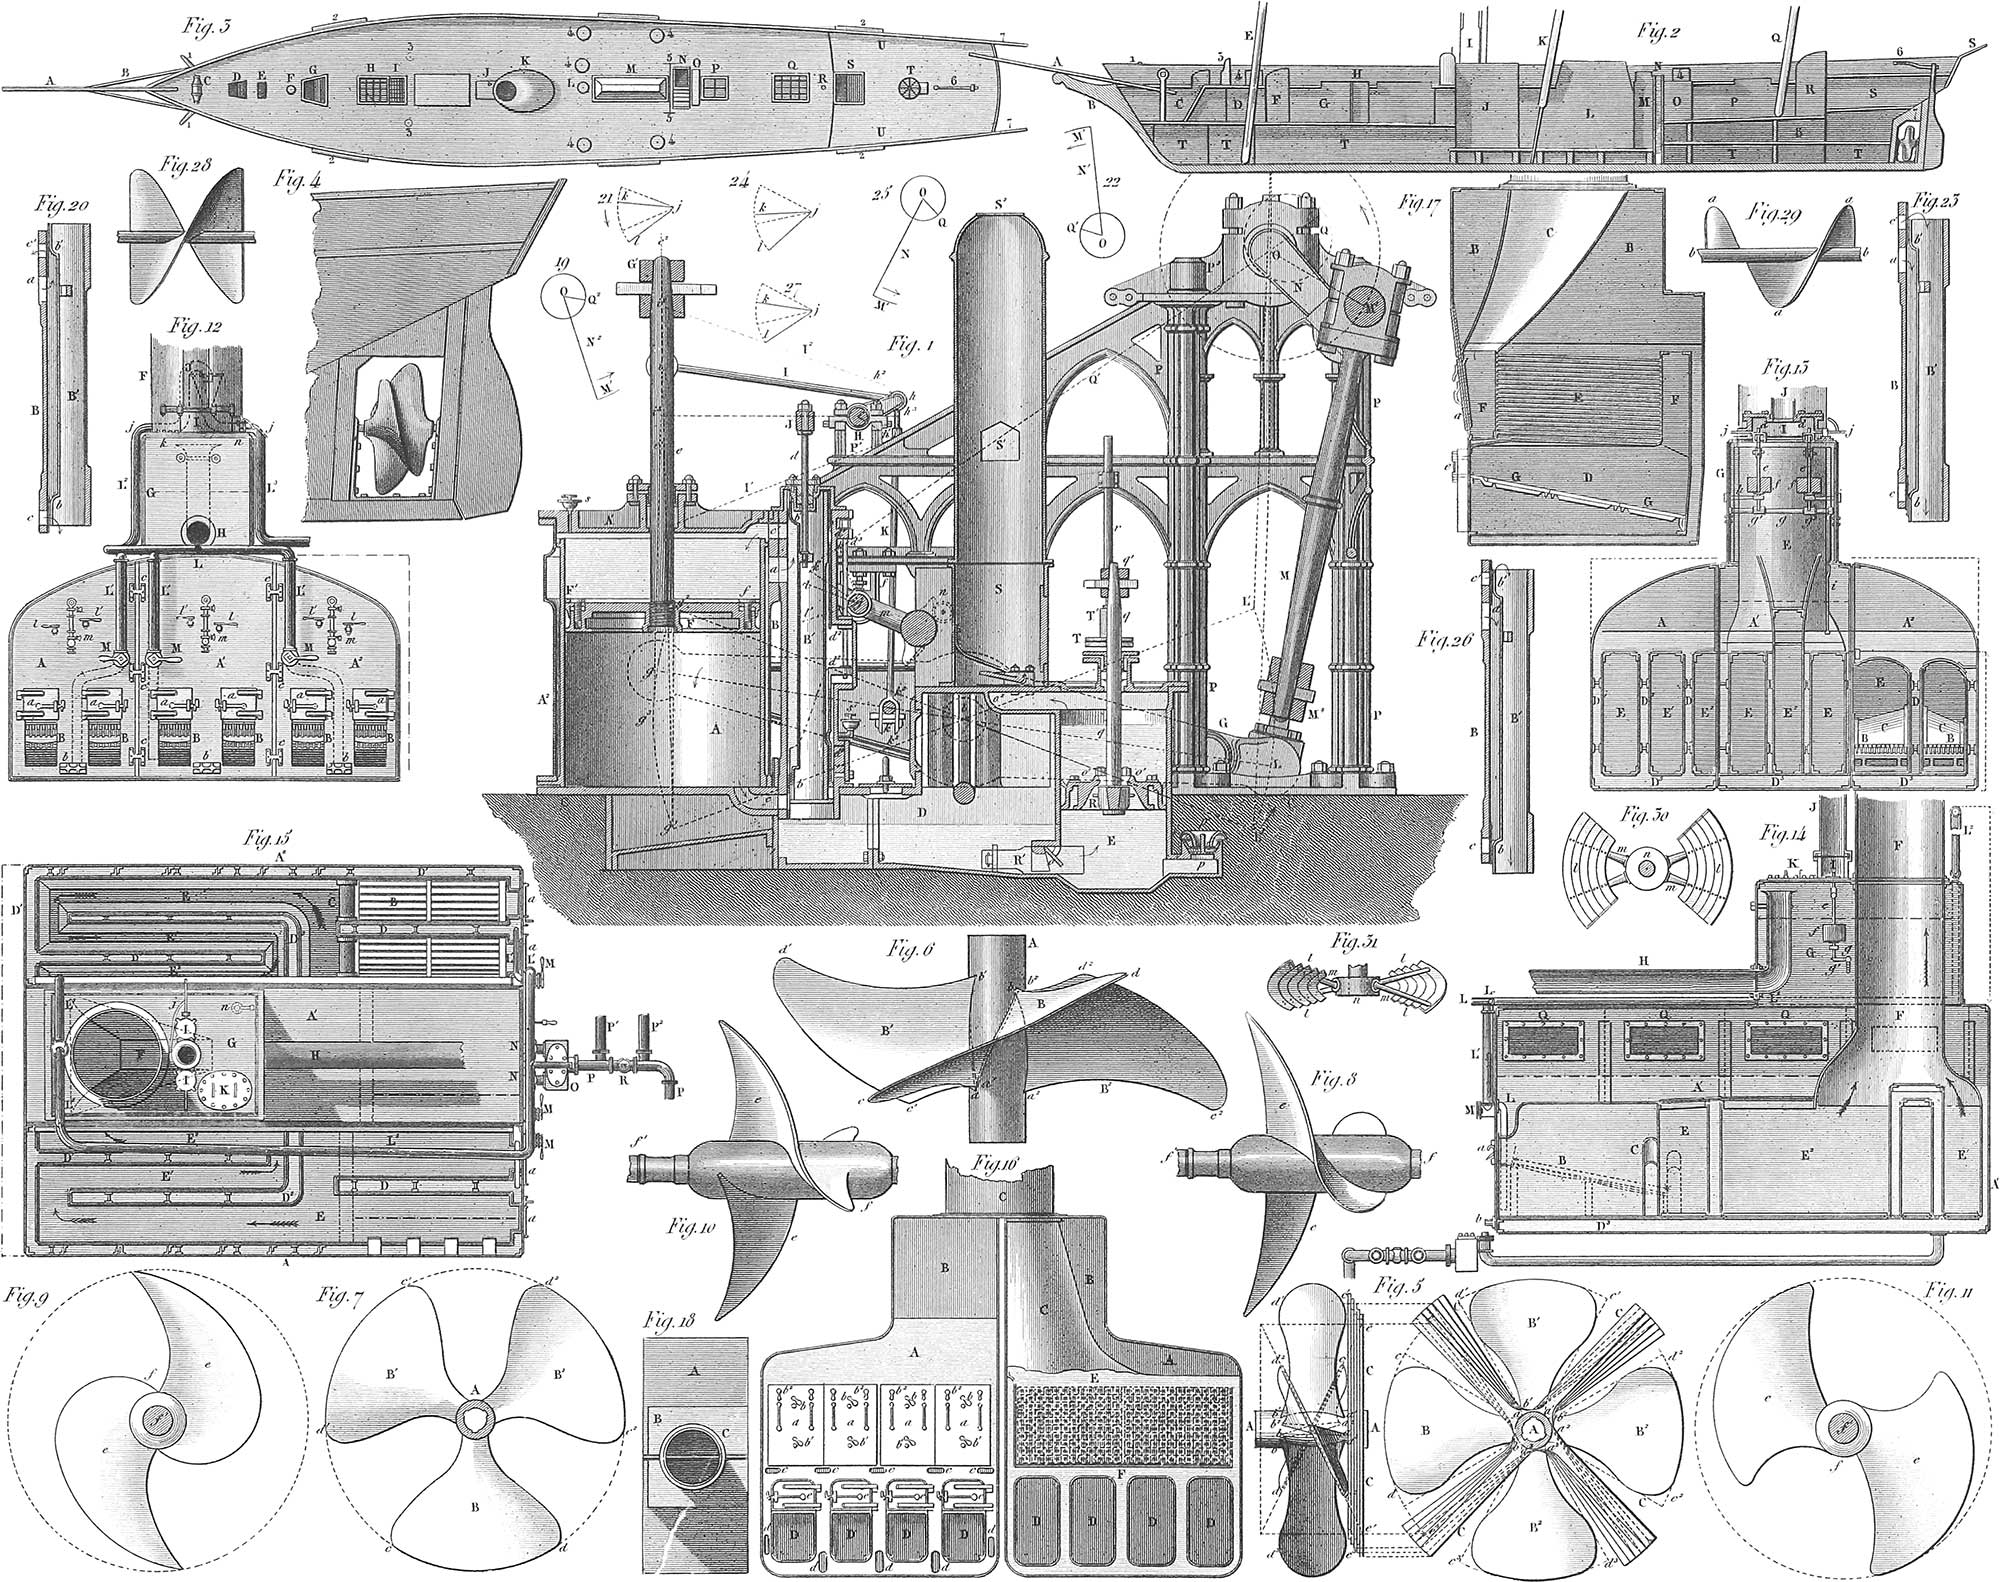 Naval Sciences - Iconographic Encyclopædia of Science, Literature, and Art